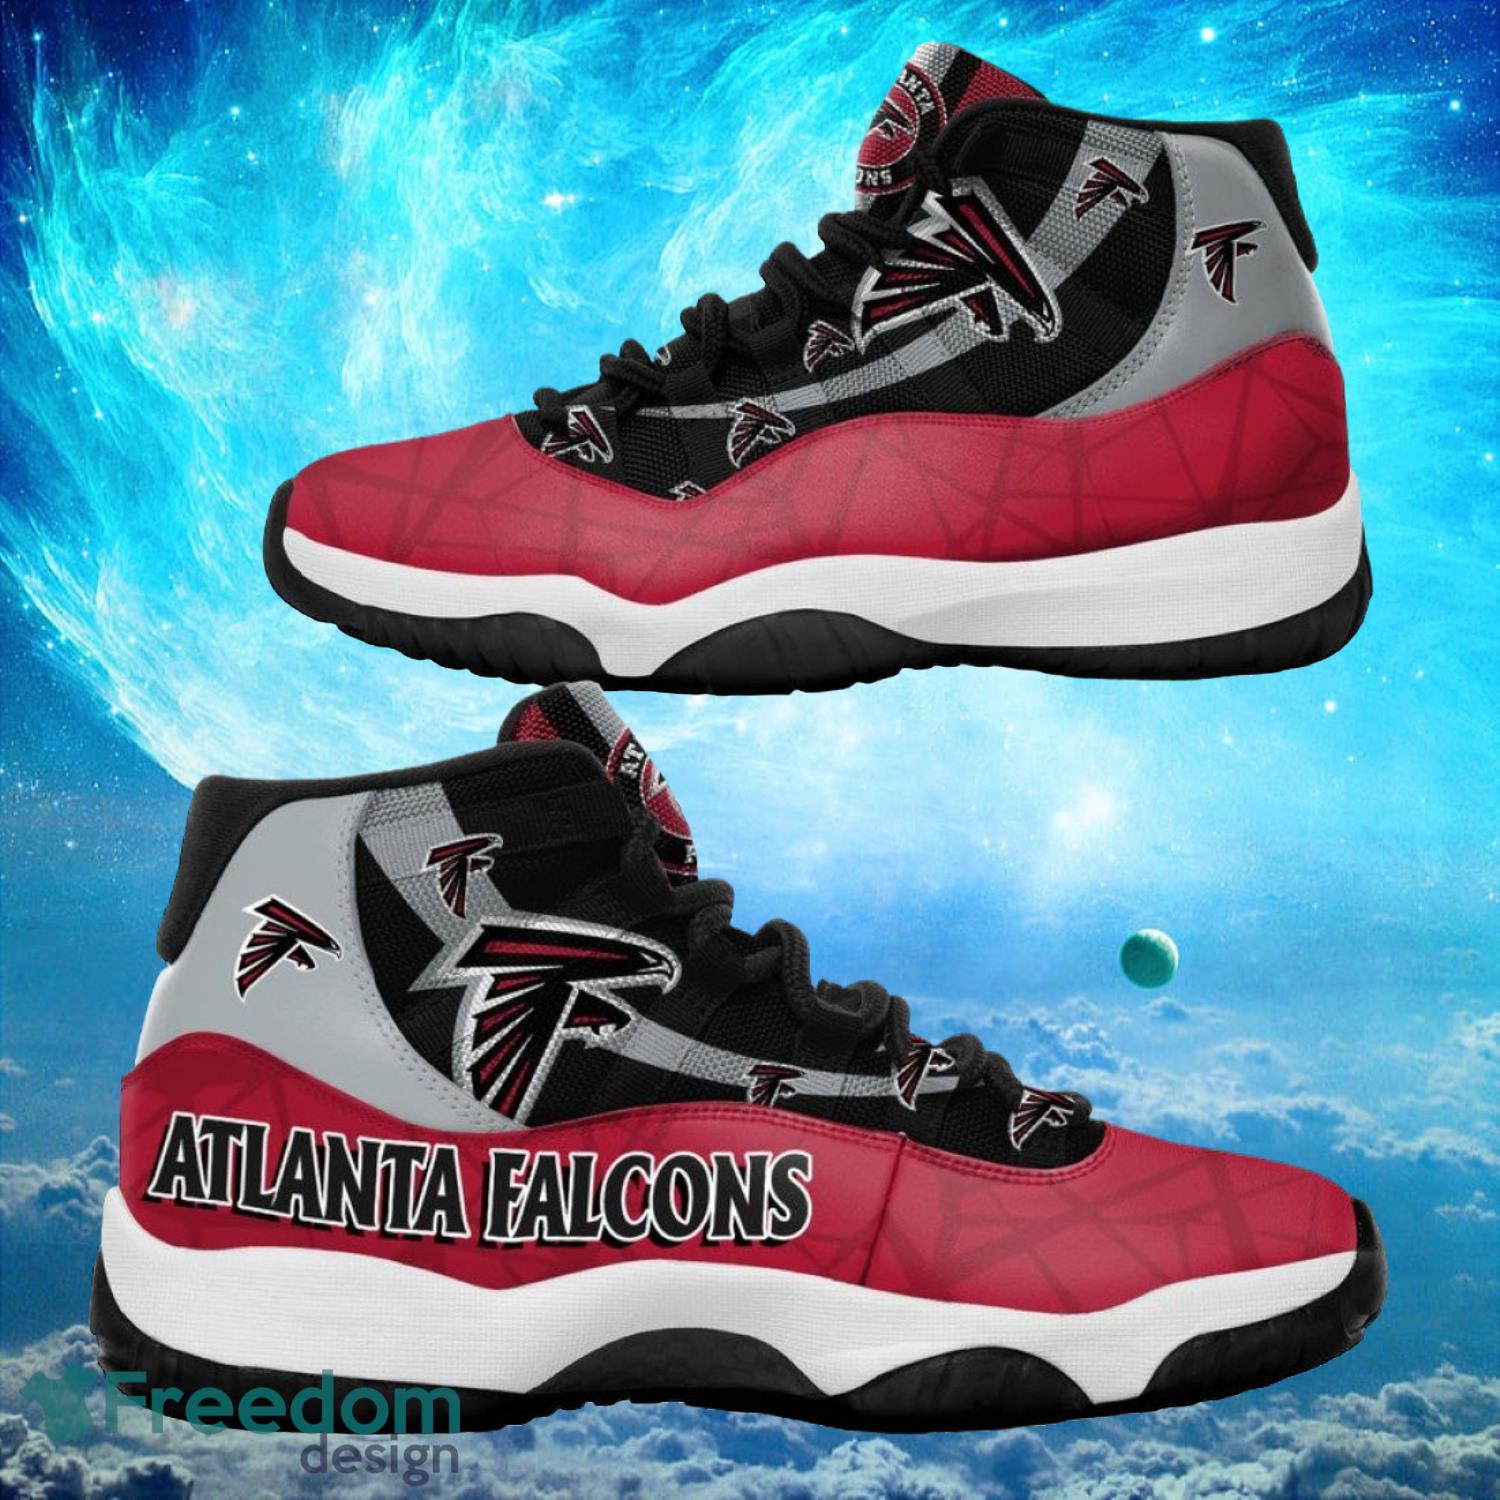 Atlanta Falcons NFL Air Jordan 11 Sneakers Shoes Gift For Fans Product Photo 1